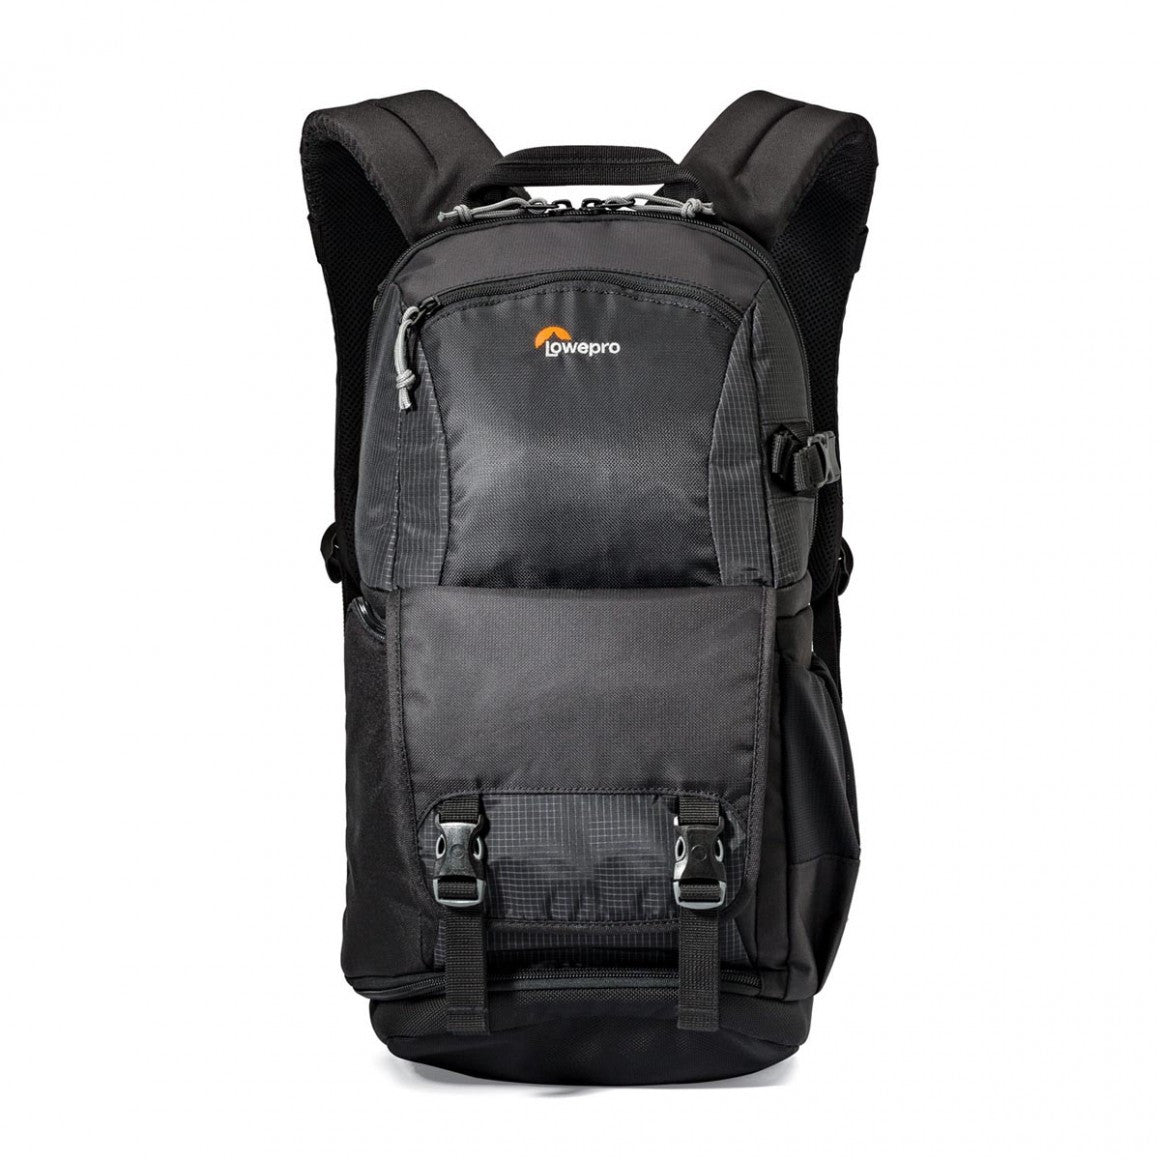 Lowepro Fastpack 150 AW II Backpack (Black), bags backpacks, Lowepro - Pictureline  - 1